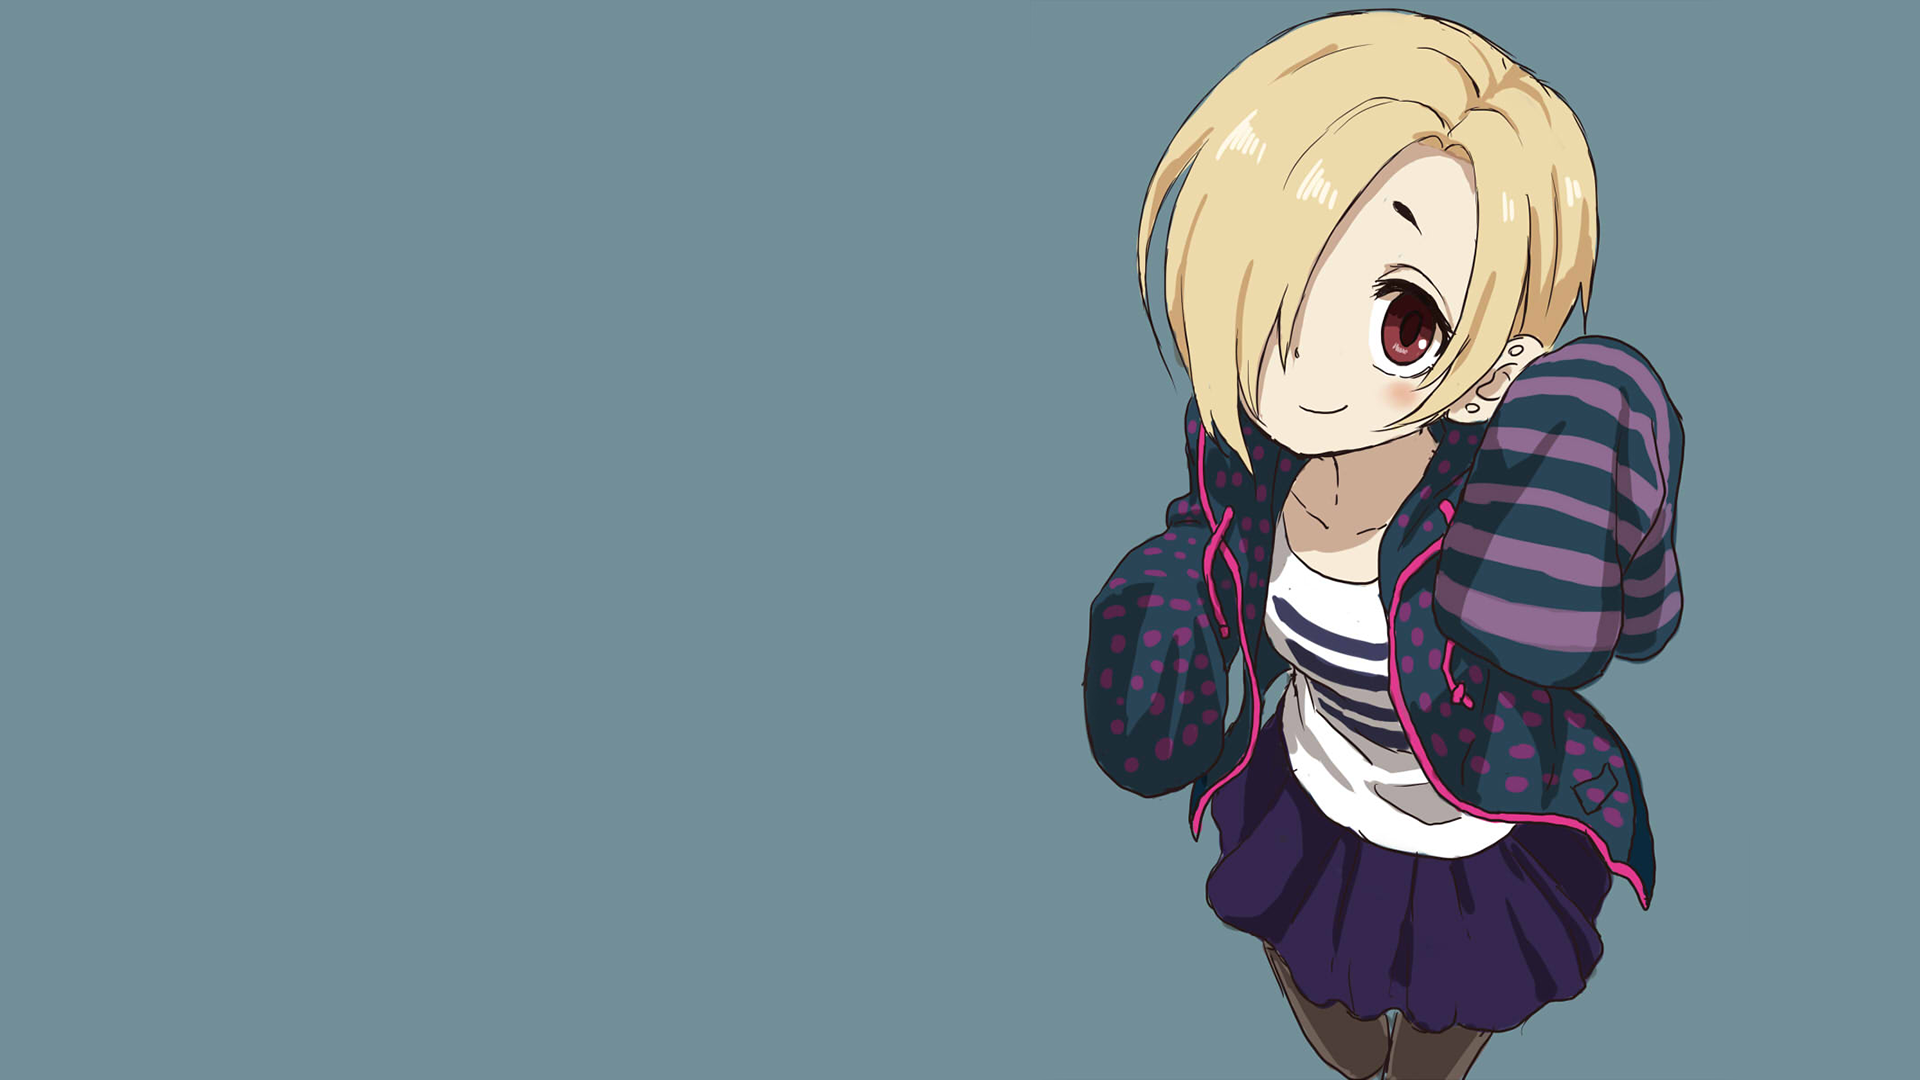 anime girl with short blonde hair